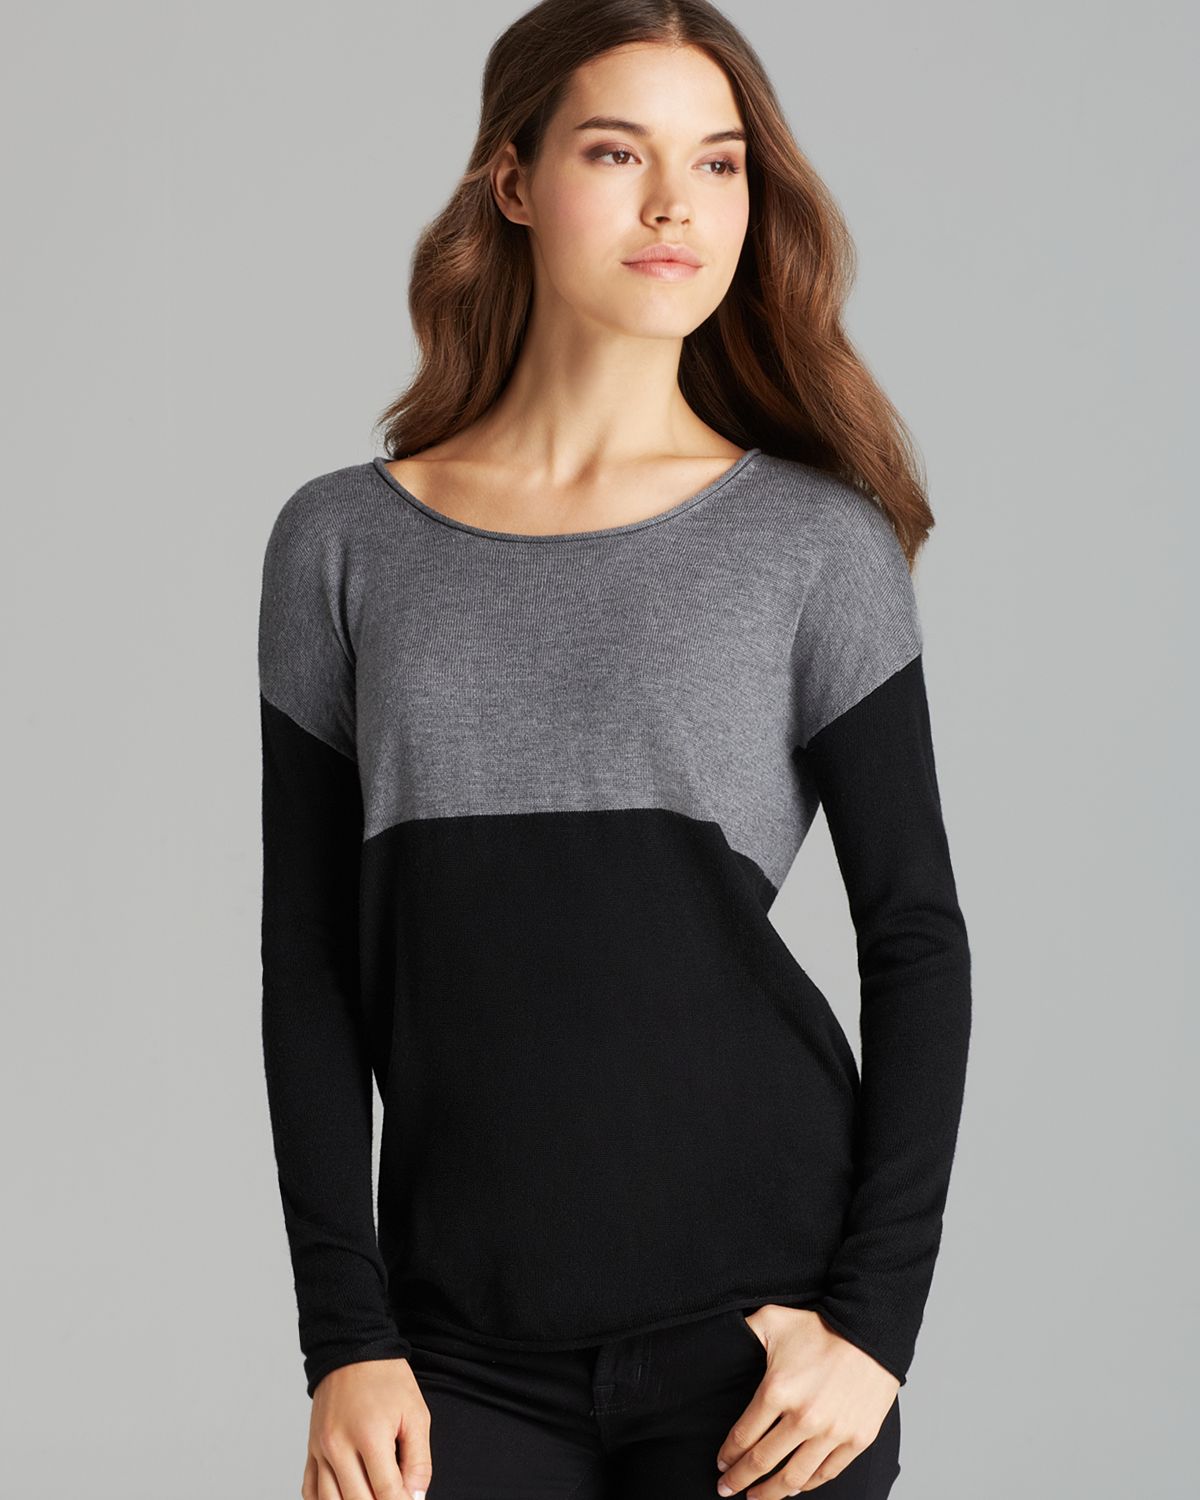 Lyst - Splendid Sweater Color Block in Gray